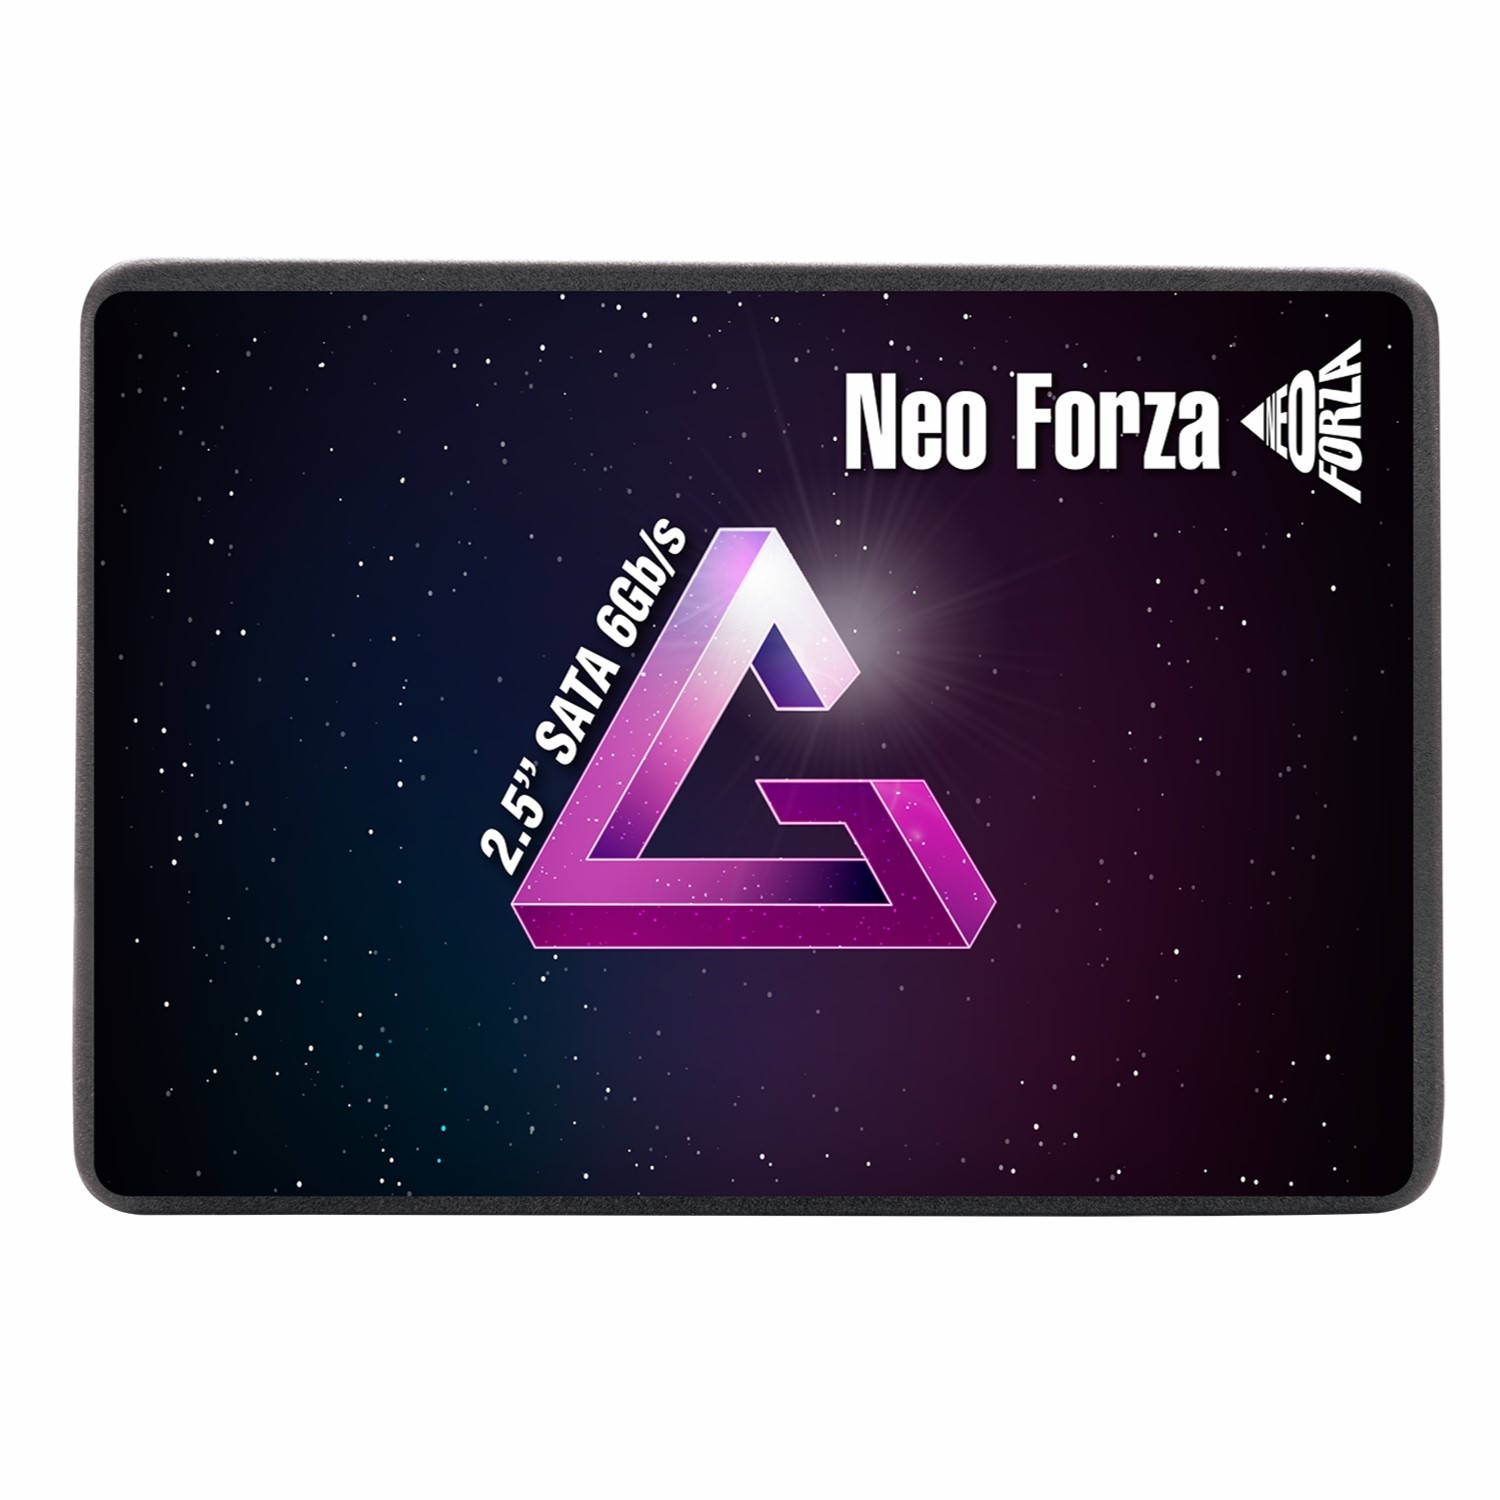 حافظه اس اس دی Neo Forza NFS01 2TB